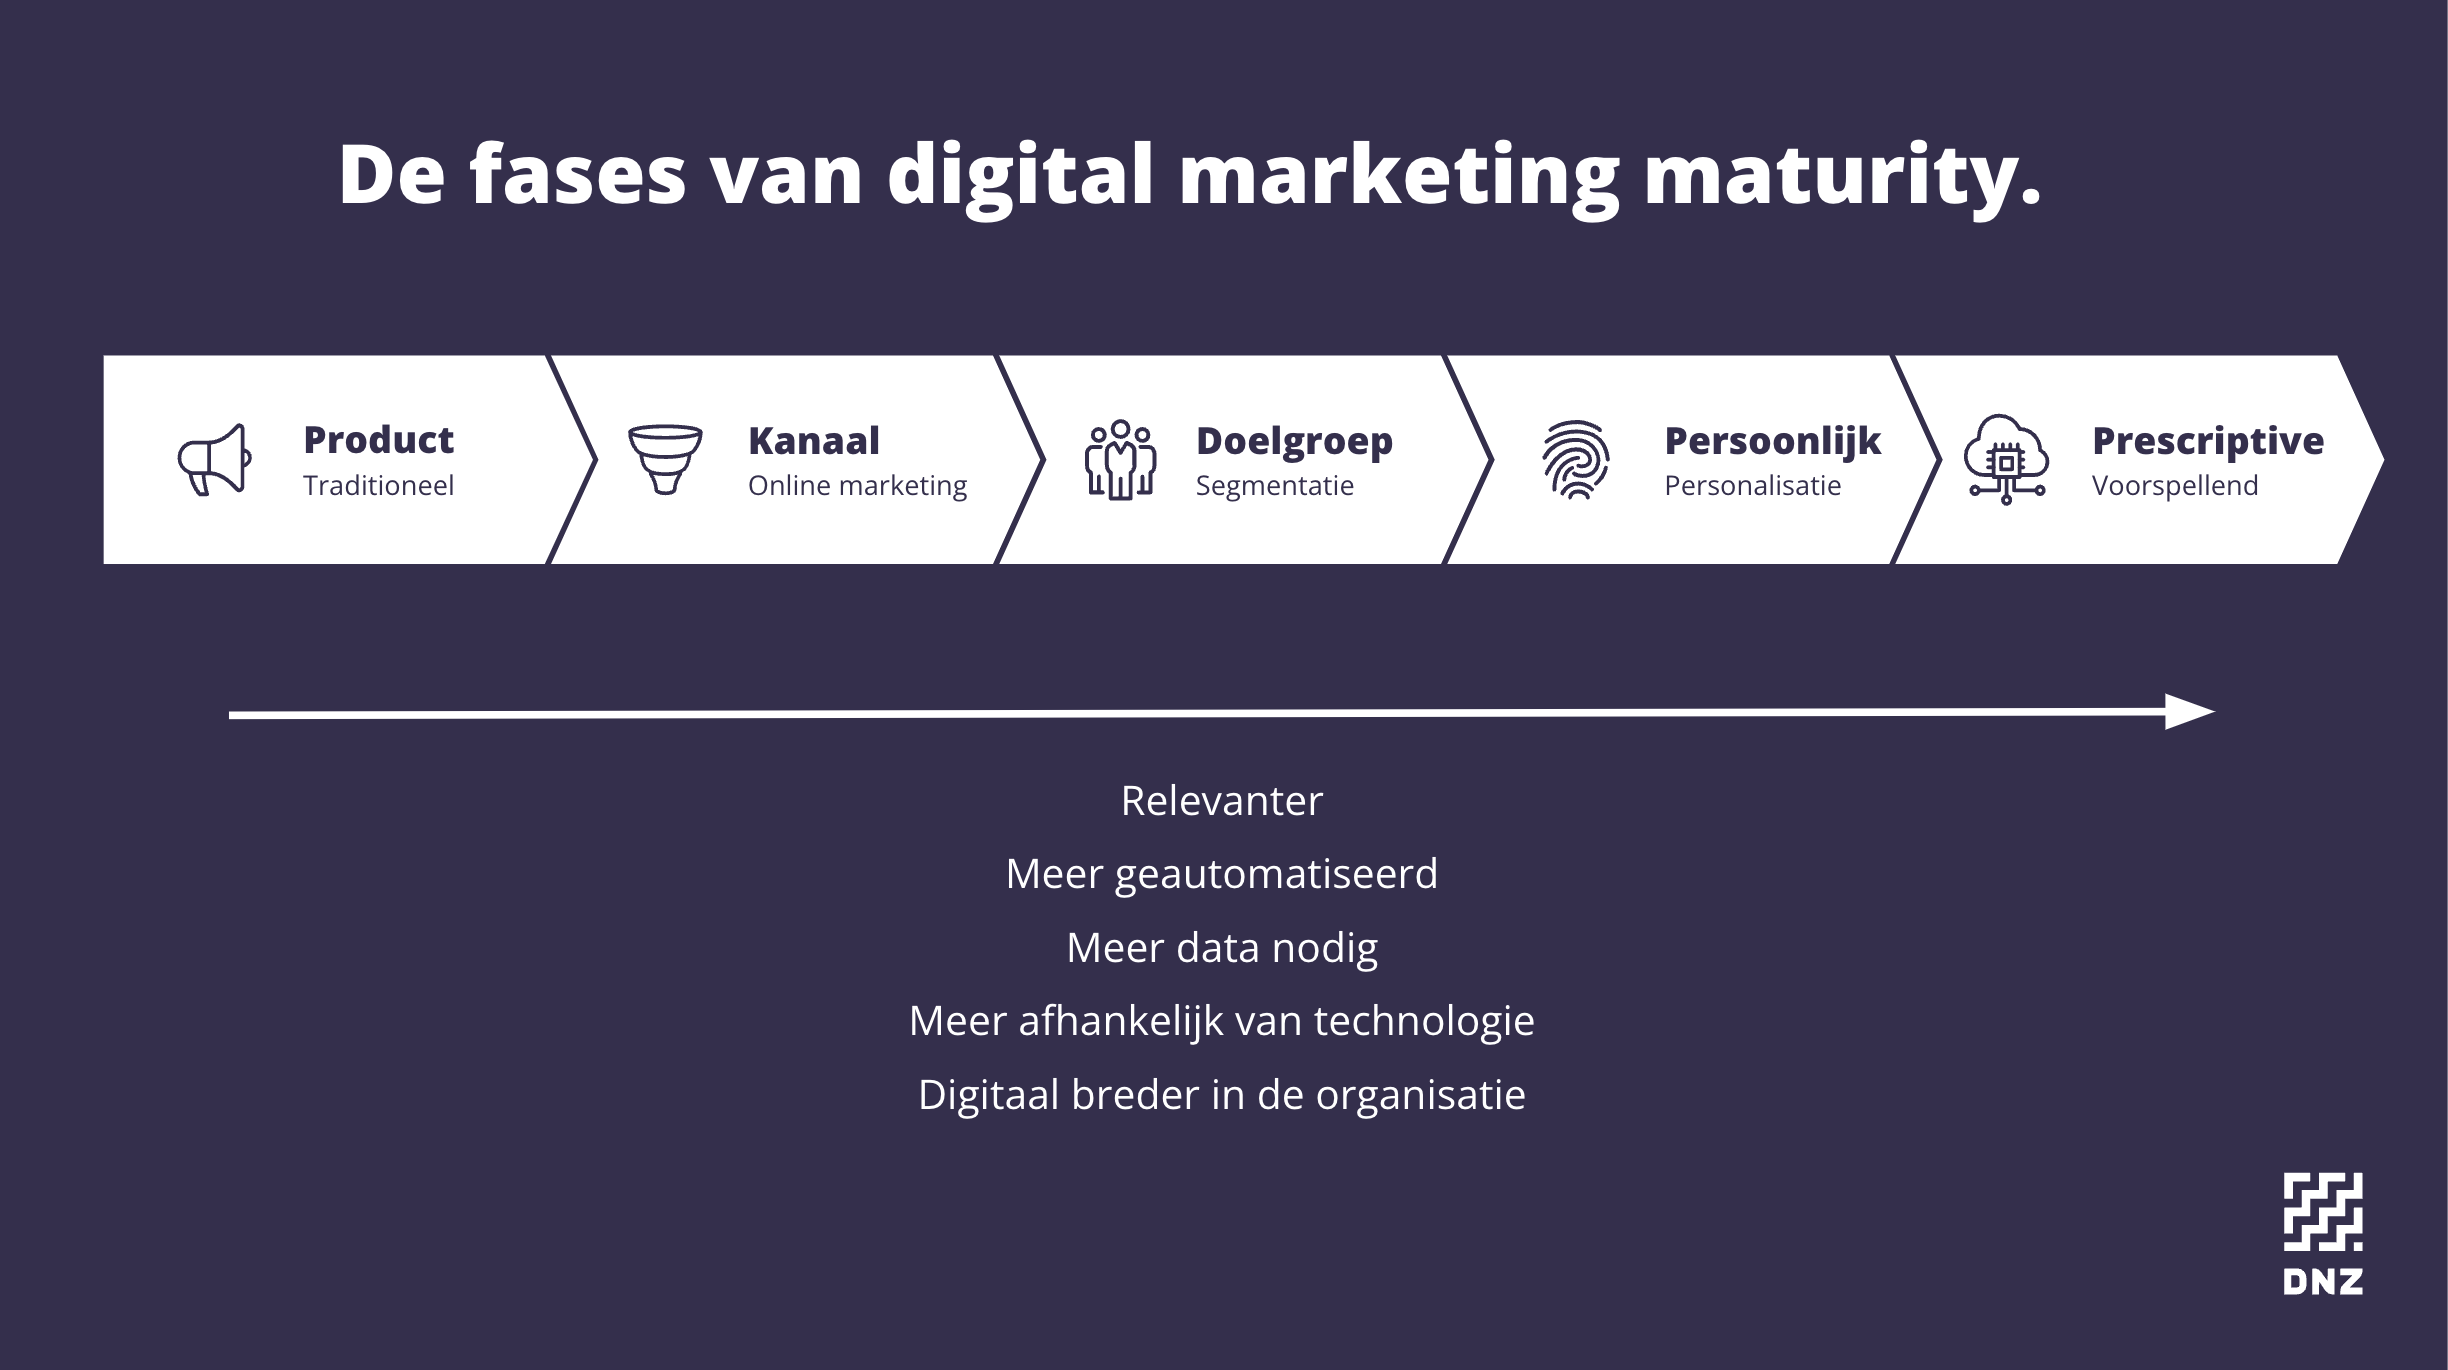 De fases in digitale marketing maturity